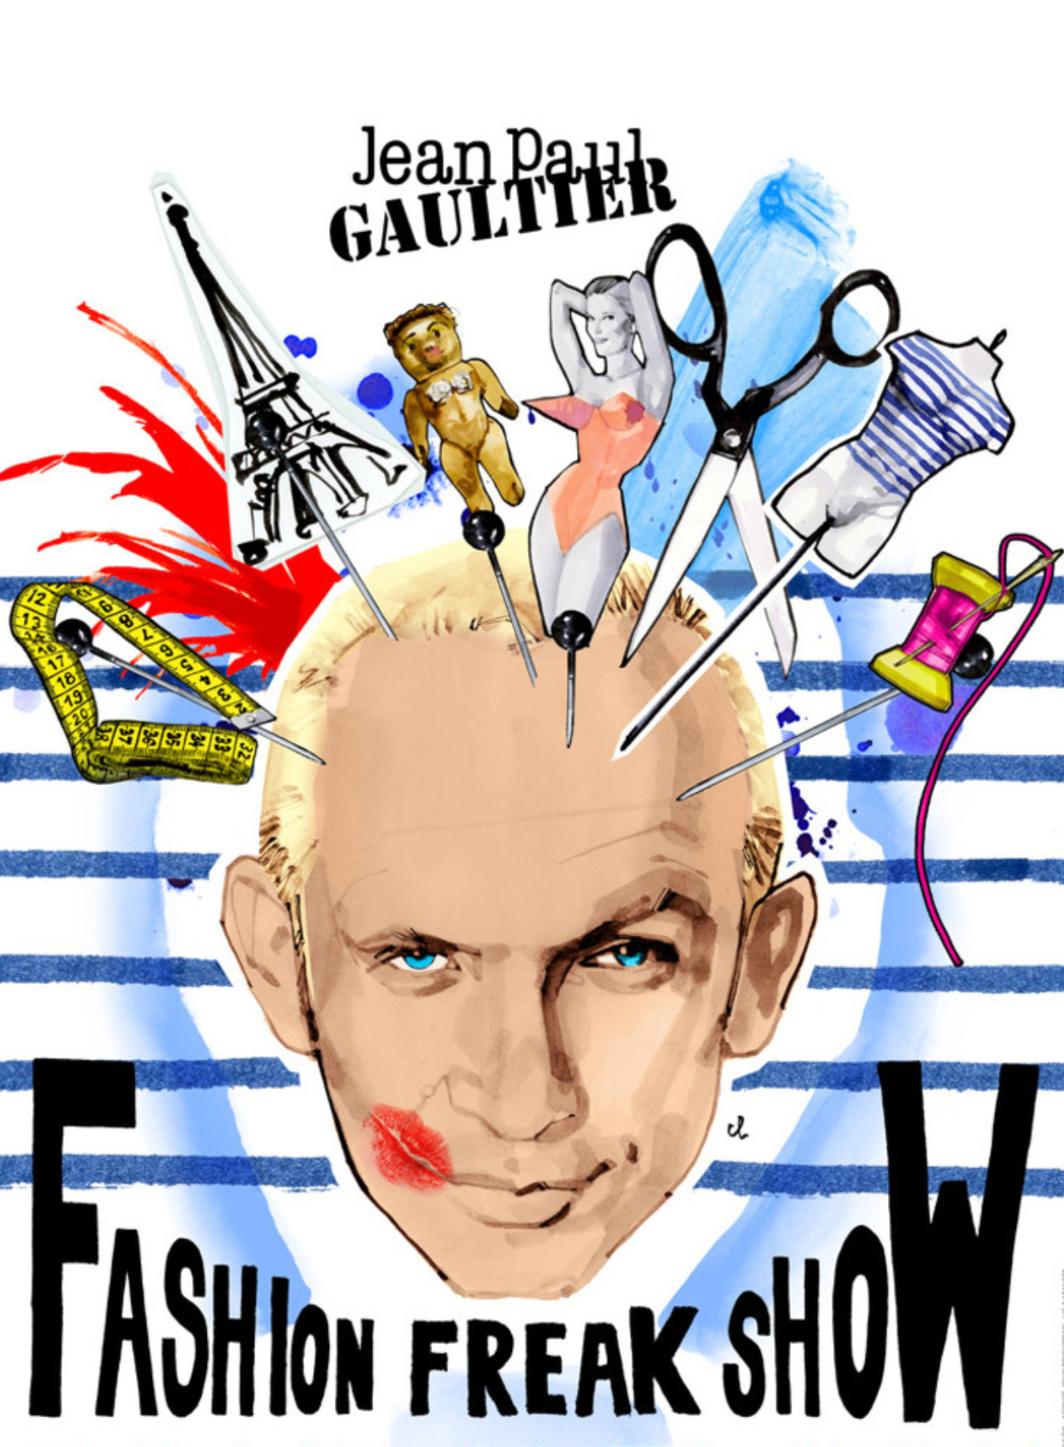 Le Fashion Freak Show de Jean Paul Gaultier s’exporte en Europe.